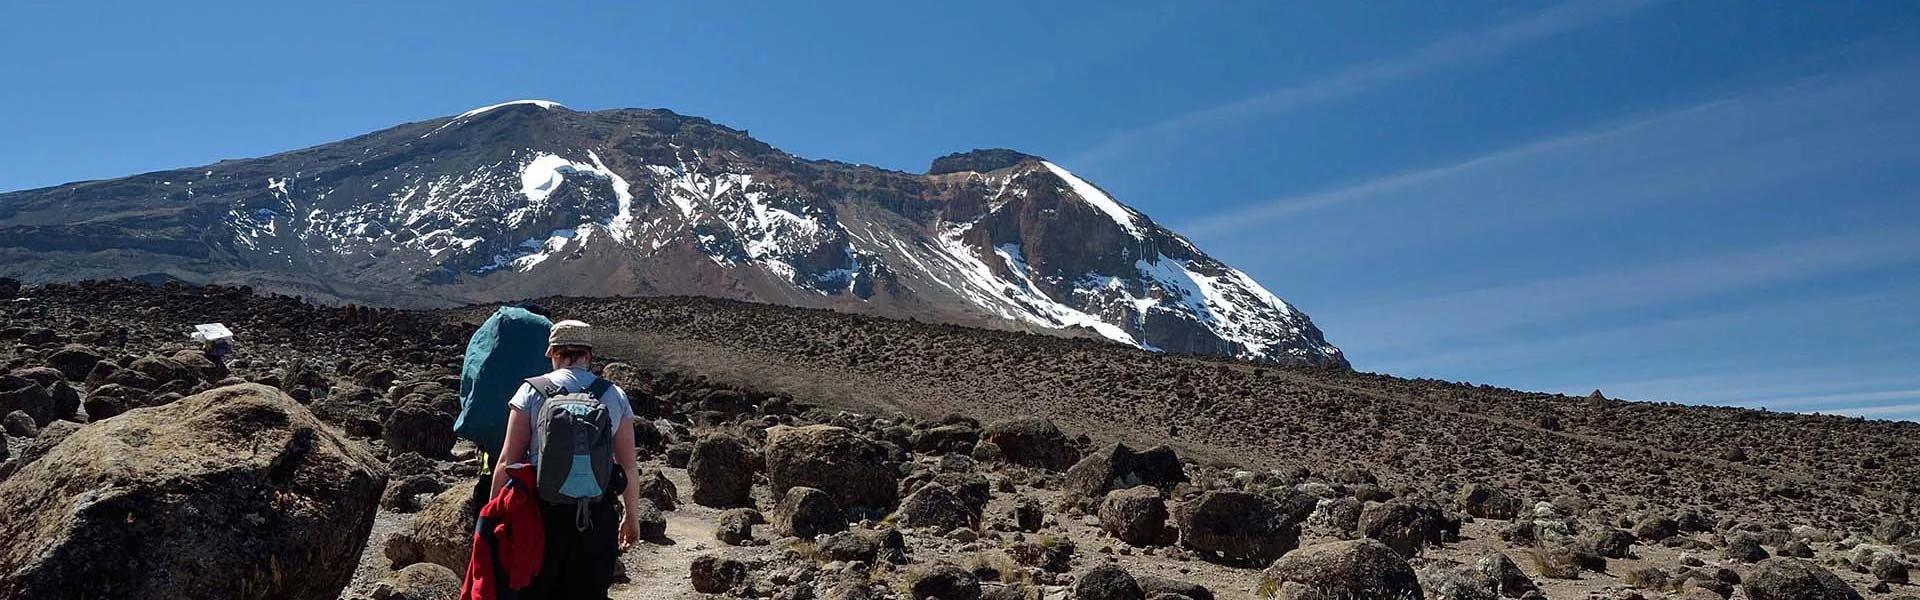 Mount Kilimanjaro Cost